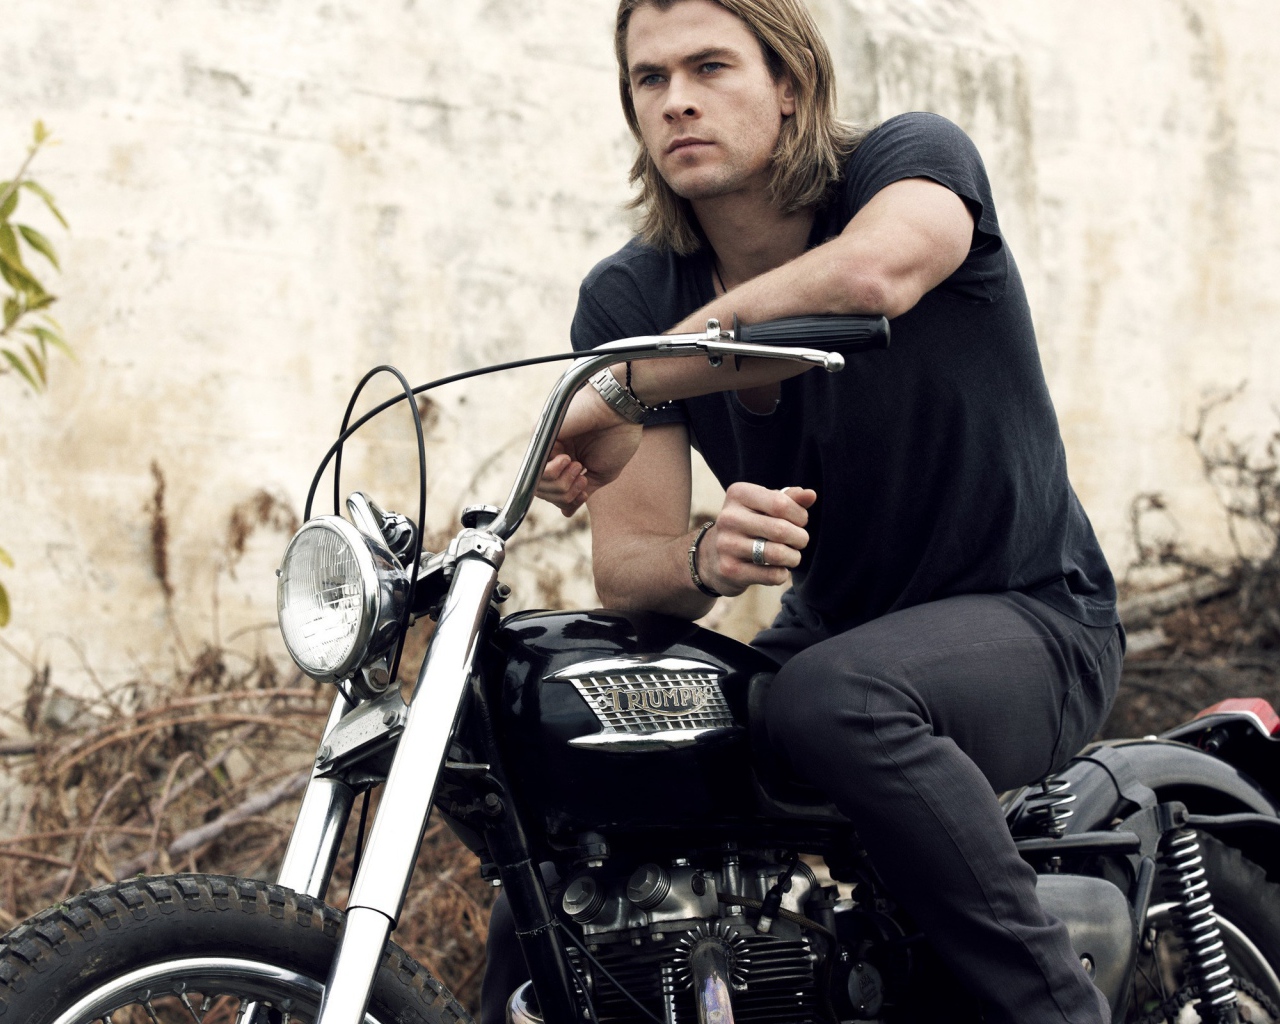 Австралийский актер на мотоцикле